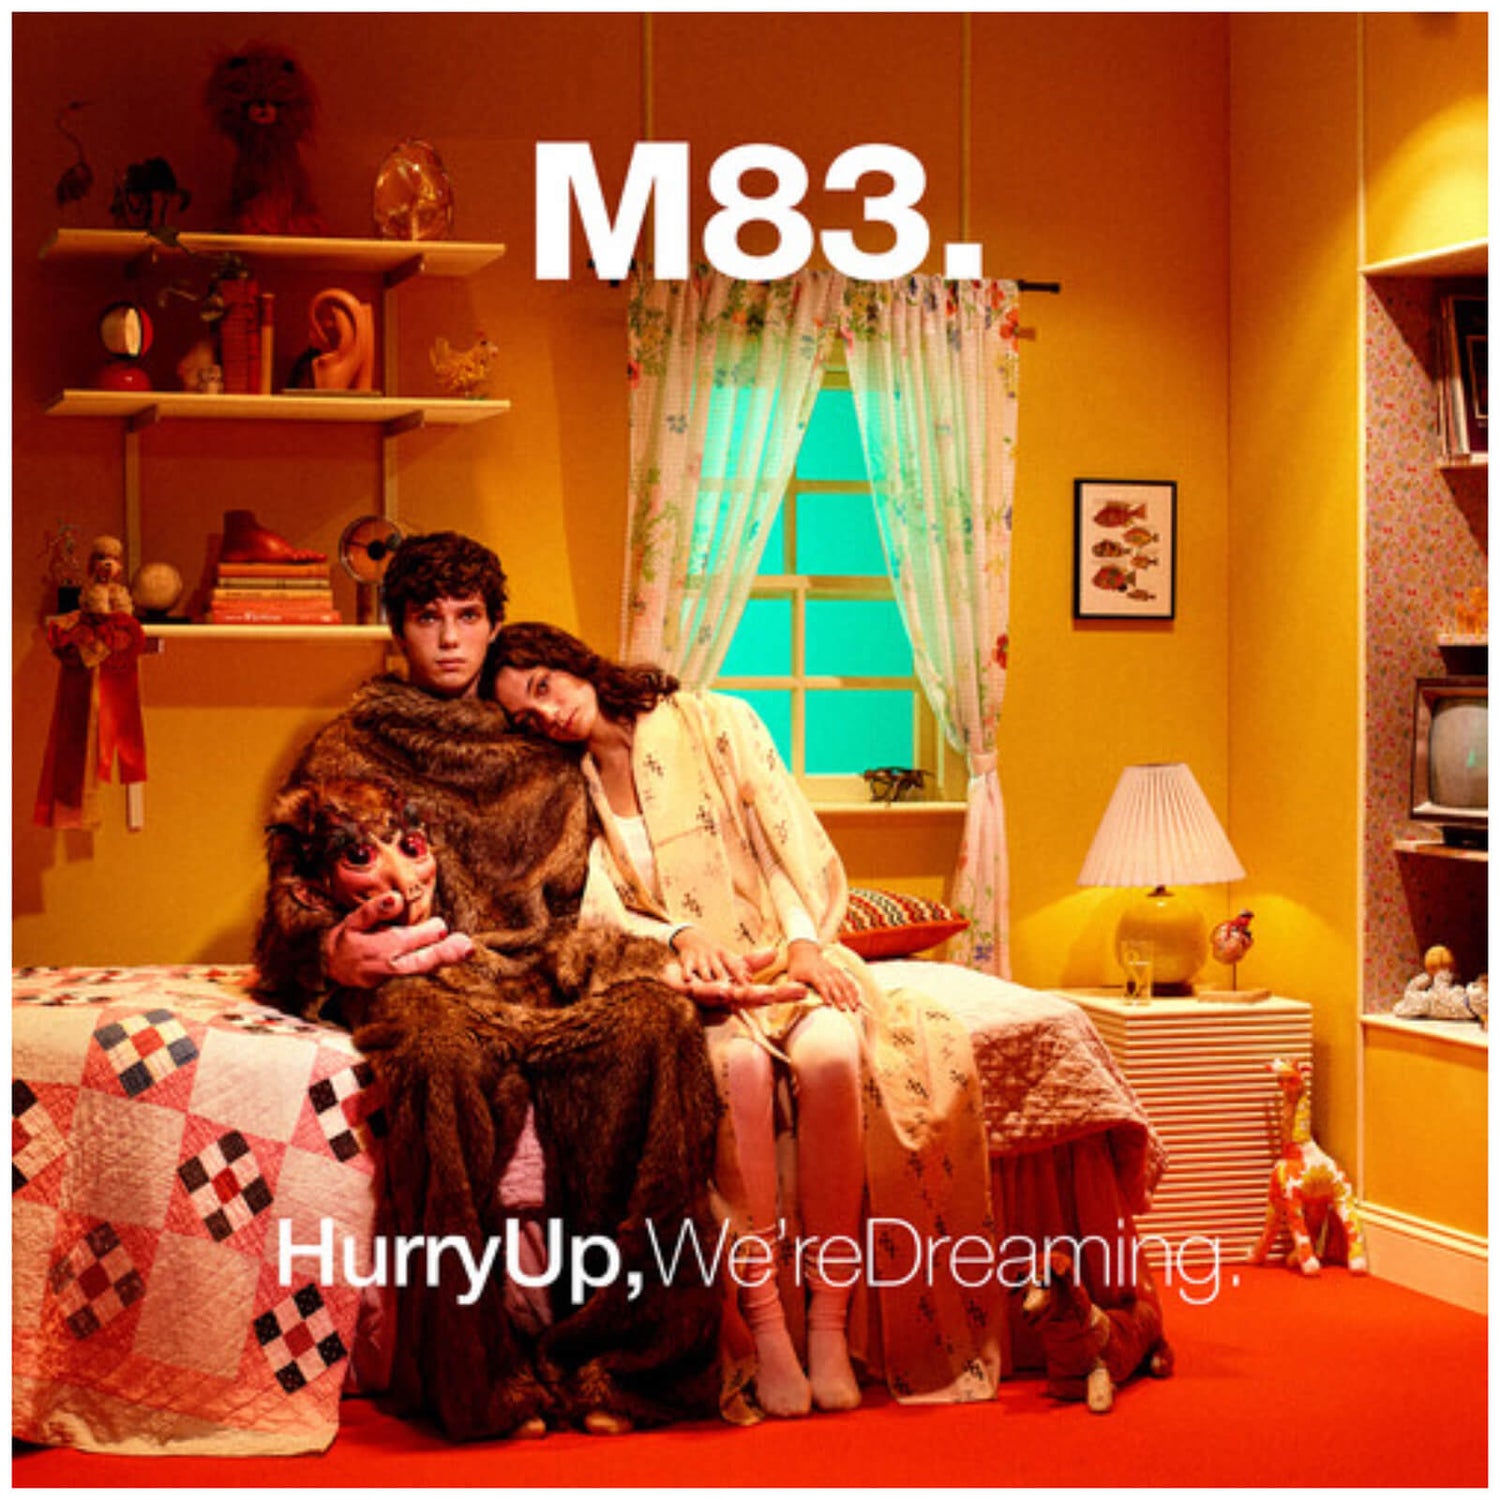 M83 - Hurry Up, We're Dreaming: 10th Anniversary Edition Vinyl 2LP (Orange)